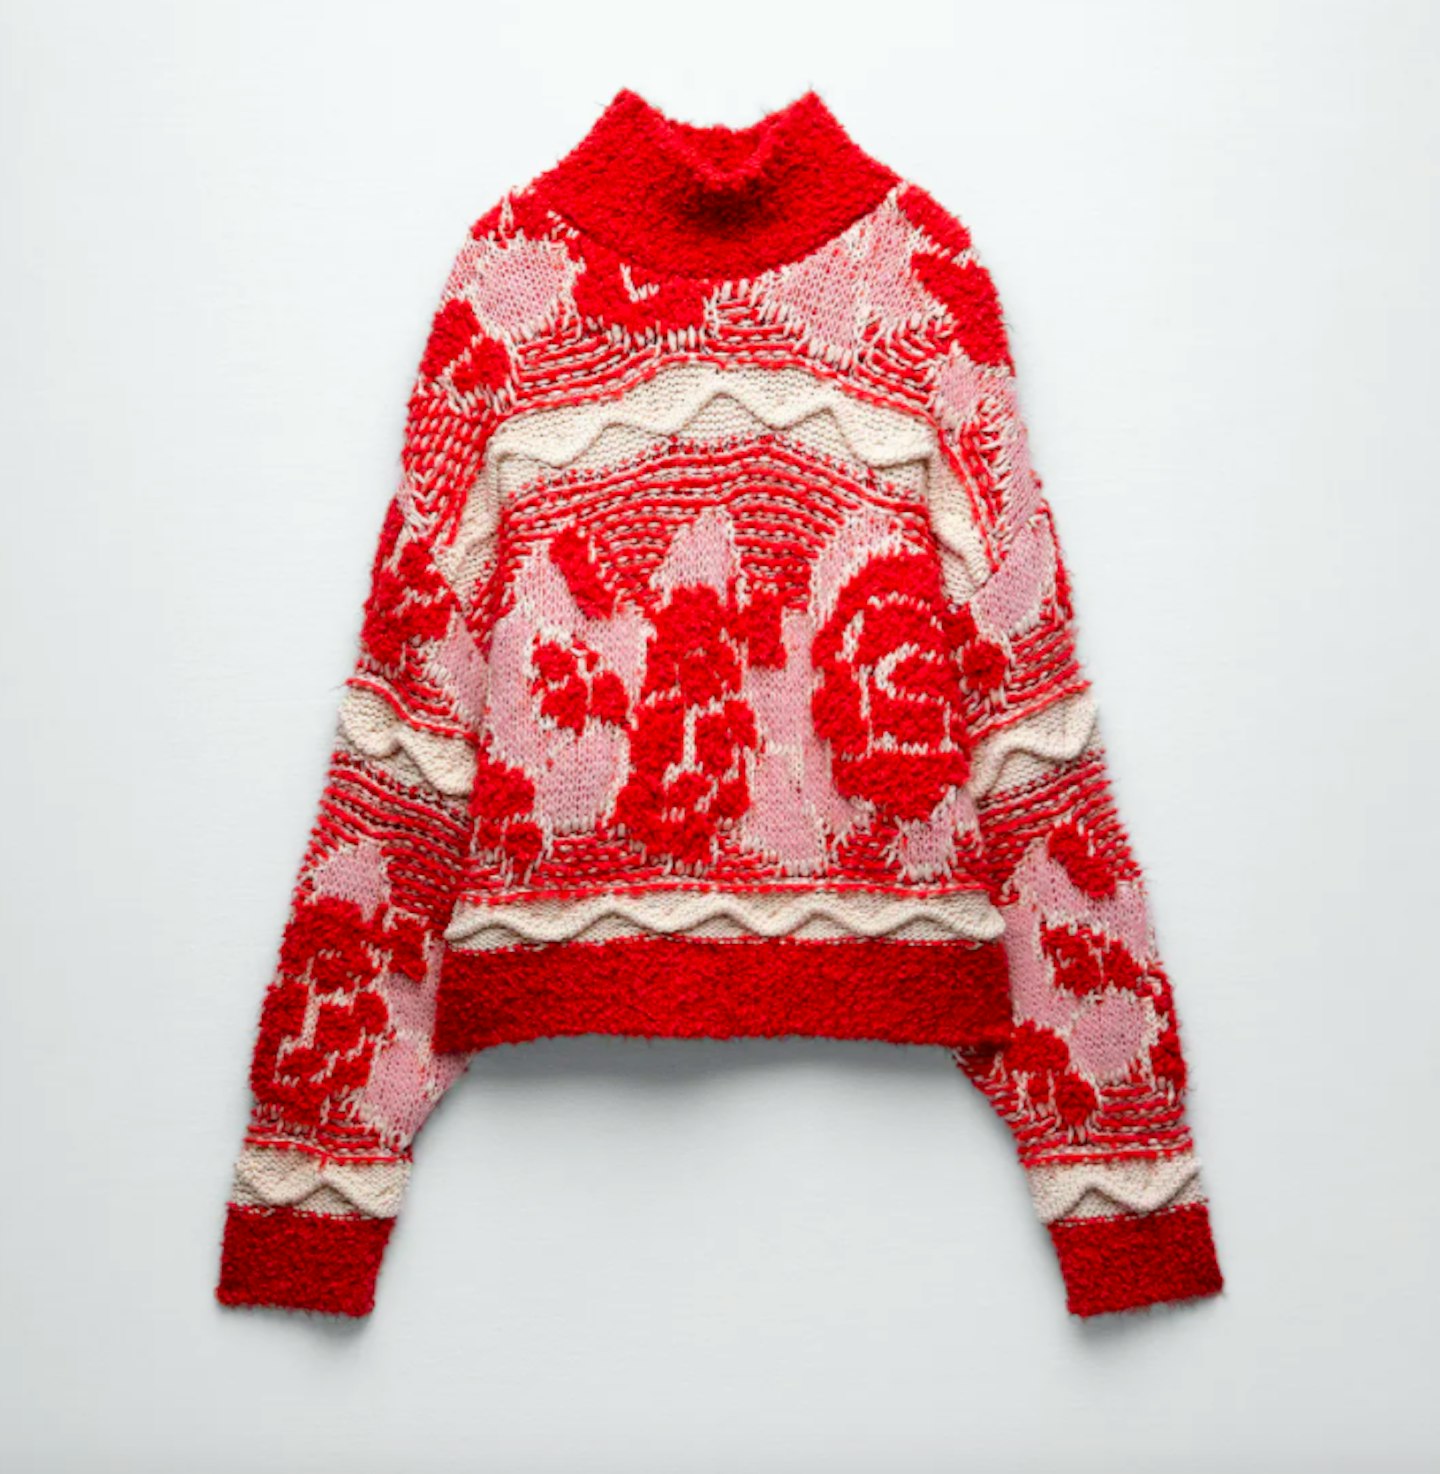 Zara, Jacquard Knit Sweater, £49.99